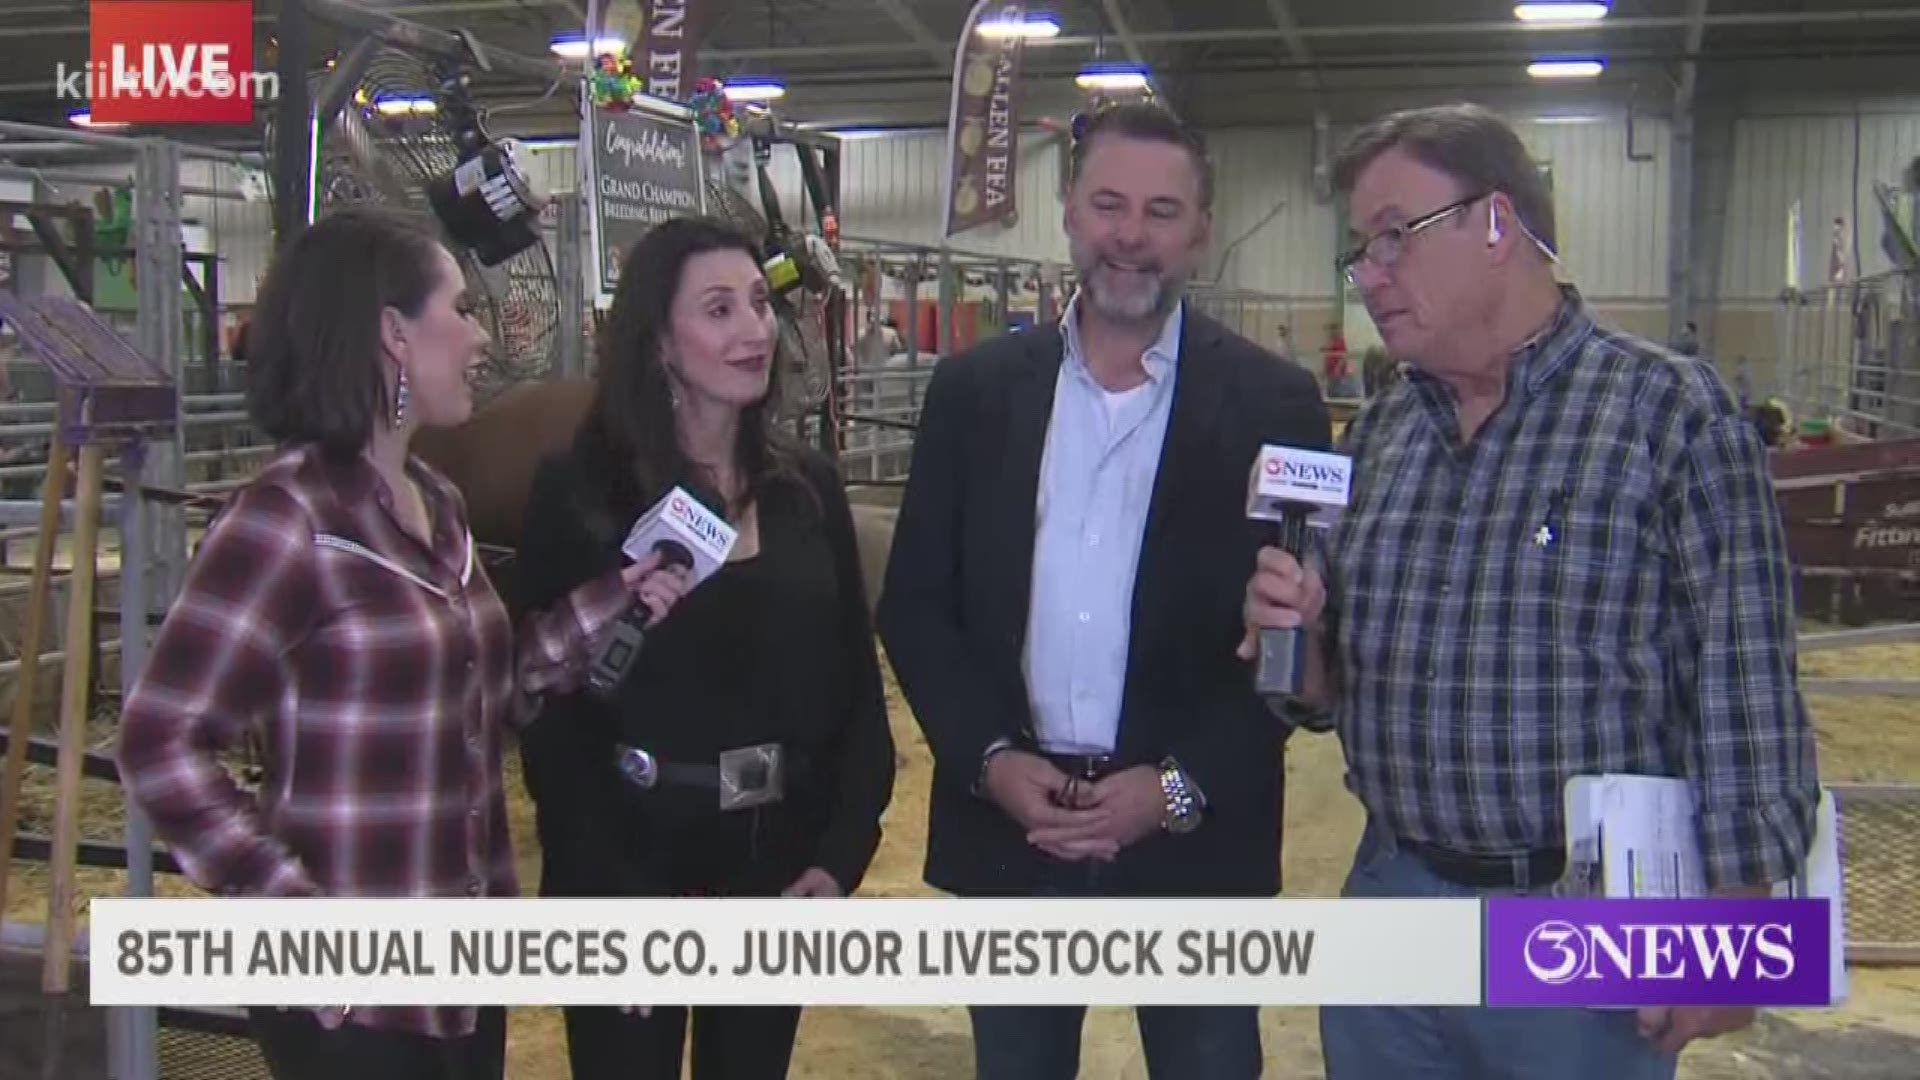 Coverage of 85th Annual Nueces County Junior Livestock Show